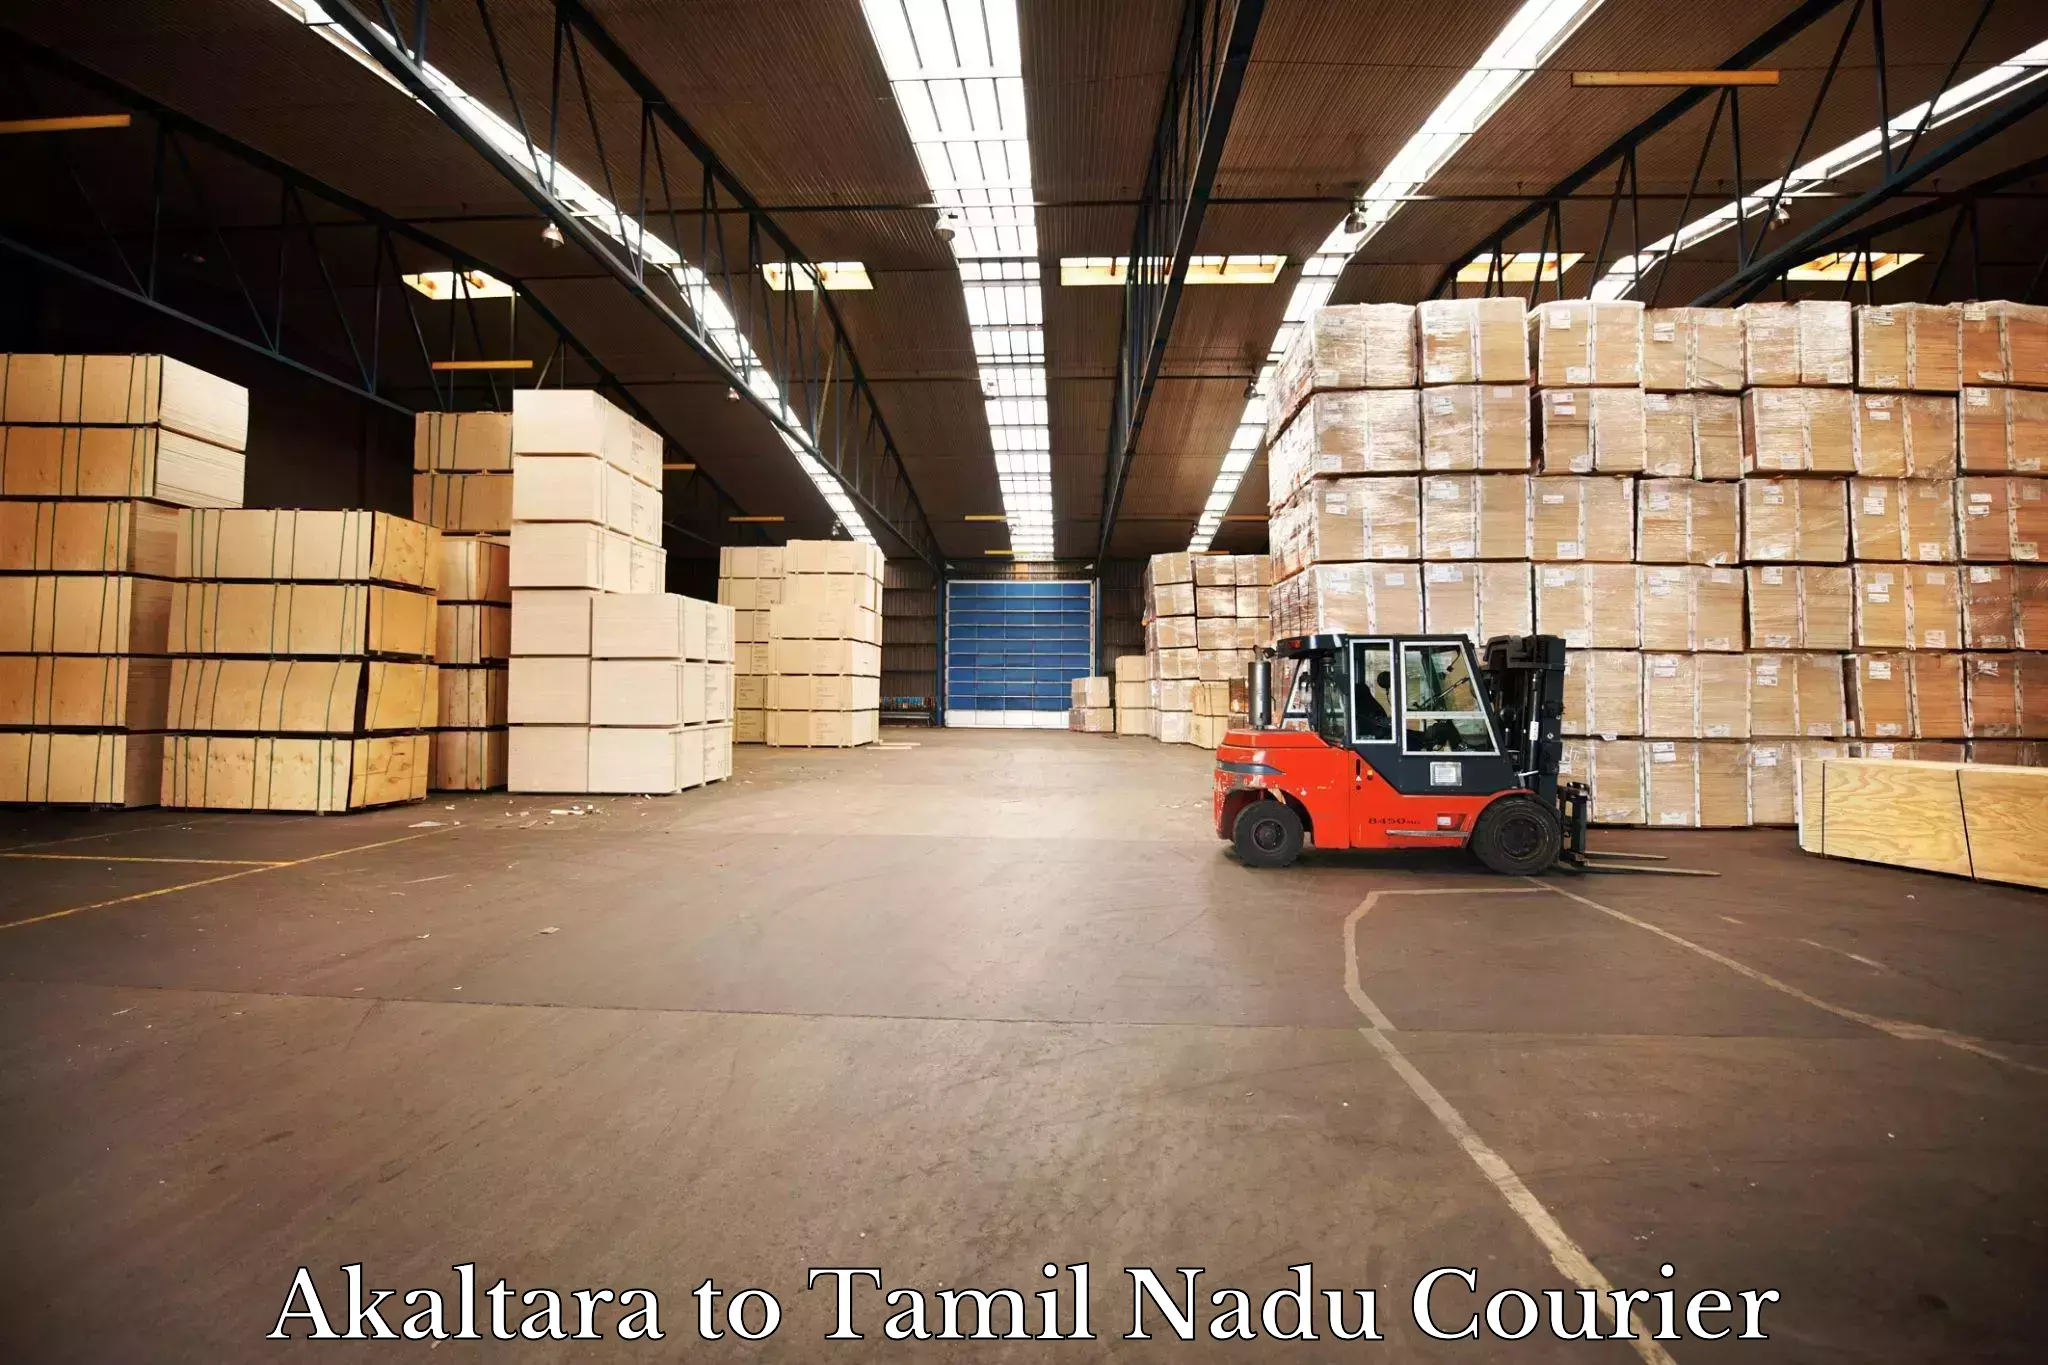 Express delivery network Akaltara to Chennai